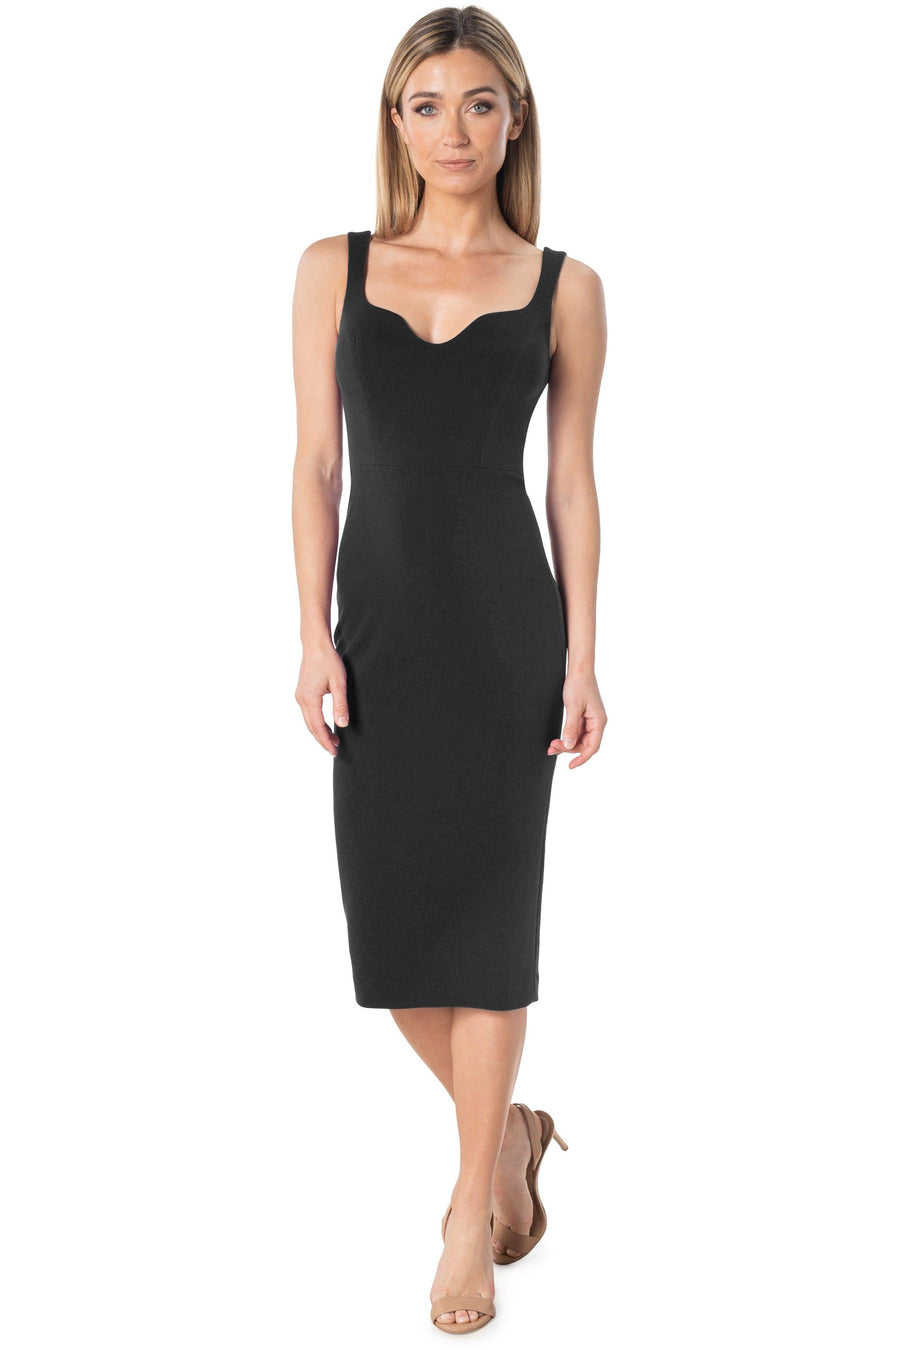 Sloane Dress / BLACK